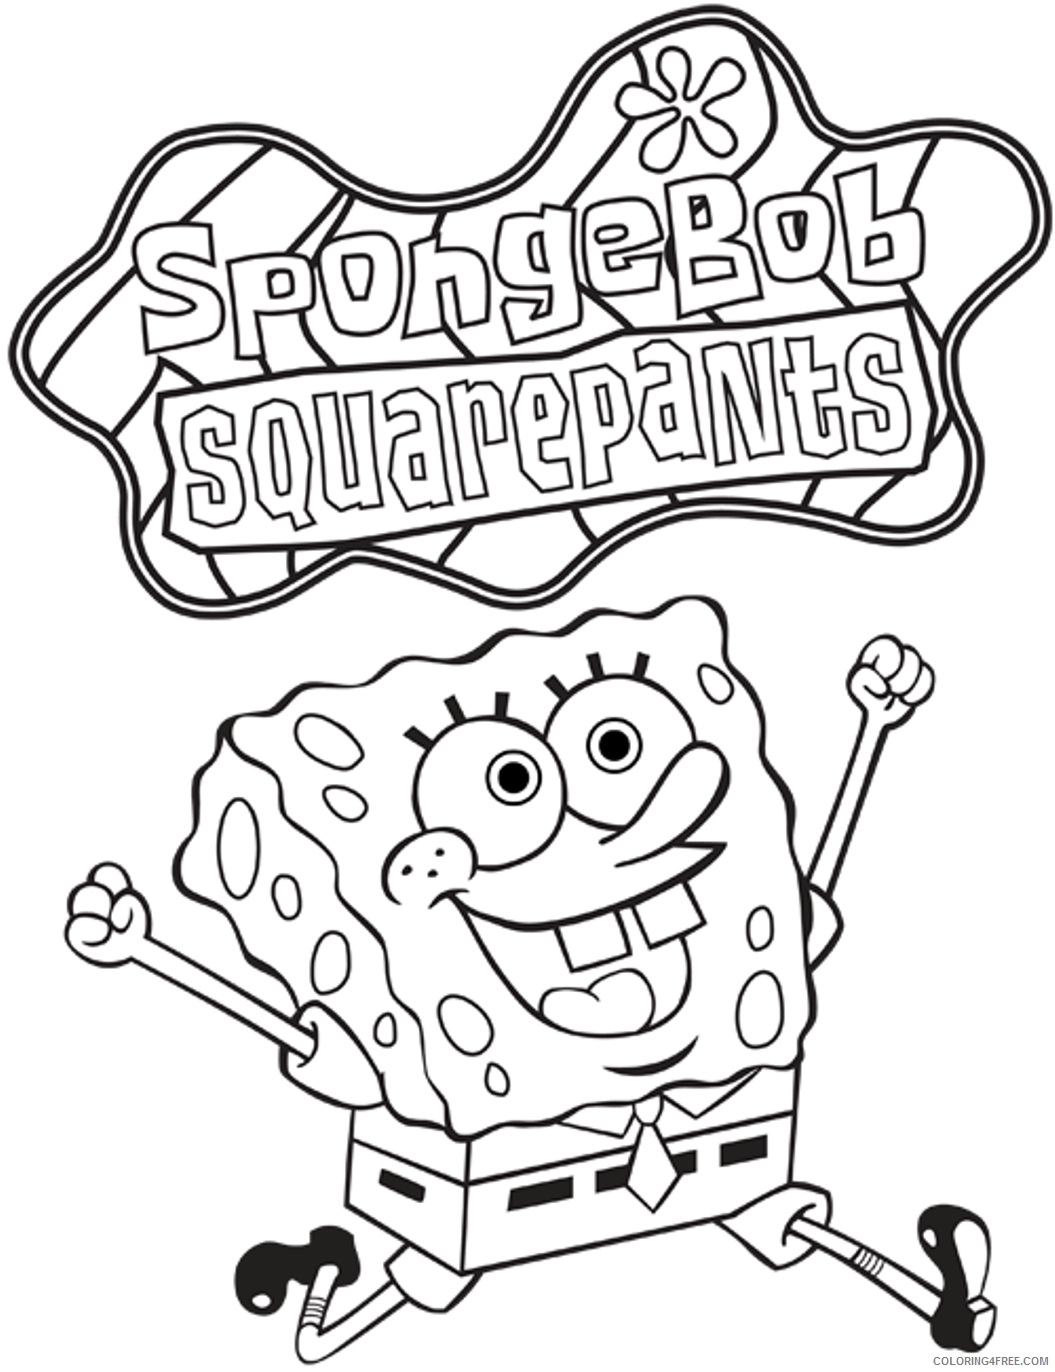 spongebob squarepants coloring pages to print Coloring4free